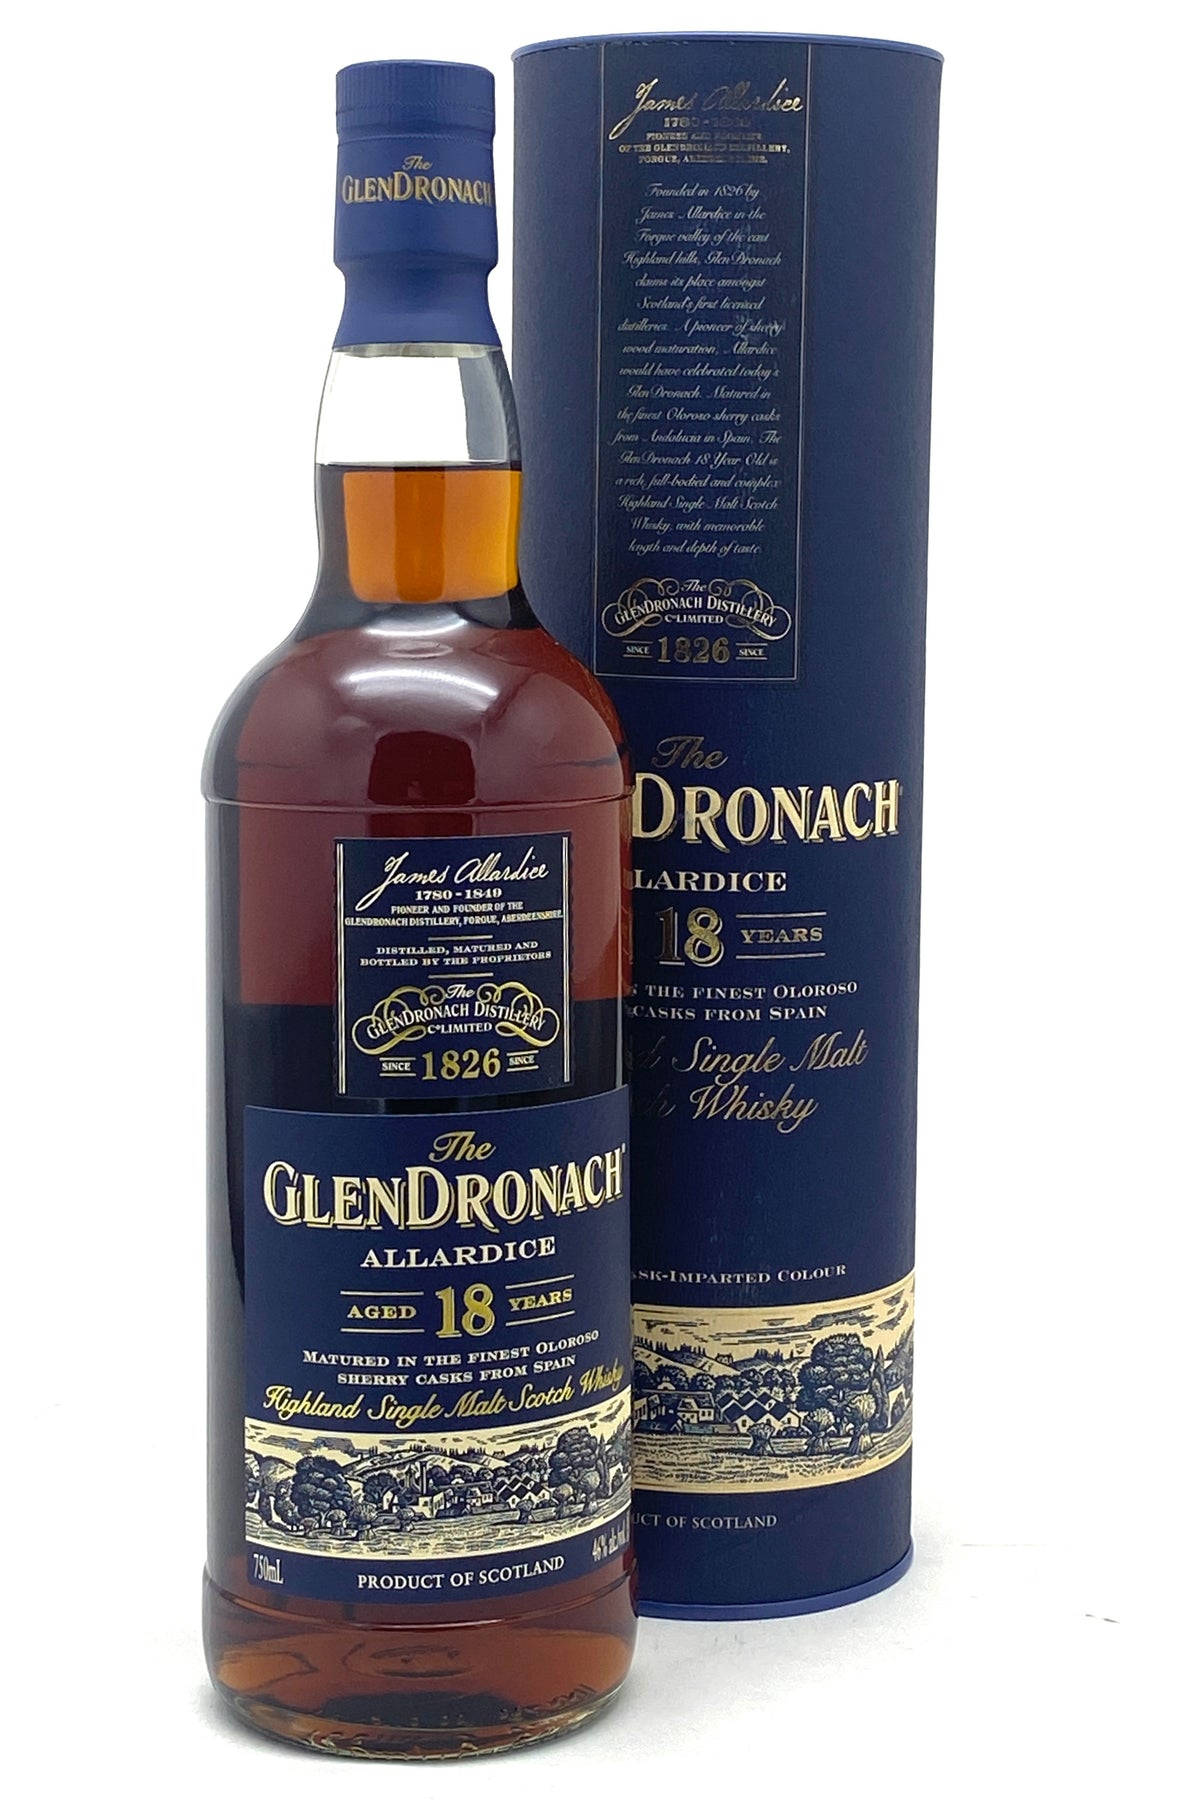 GlenDronach 18 Years Old Allardice Scotch Whisky